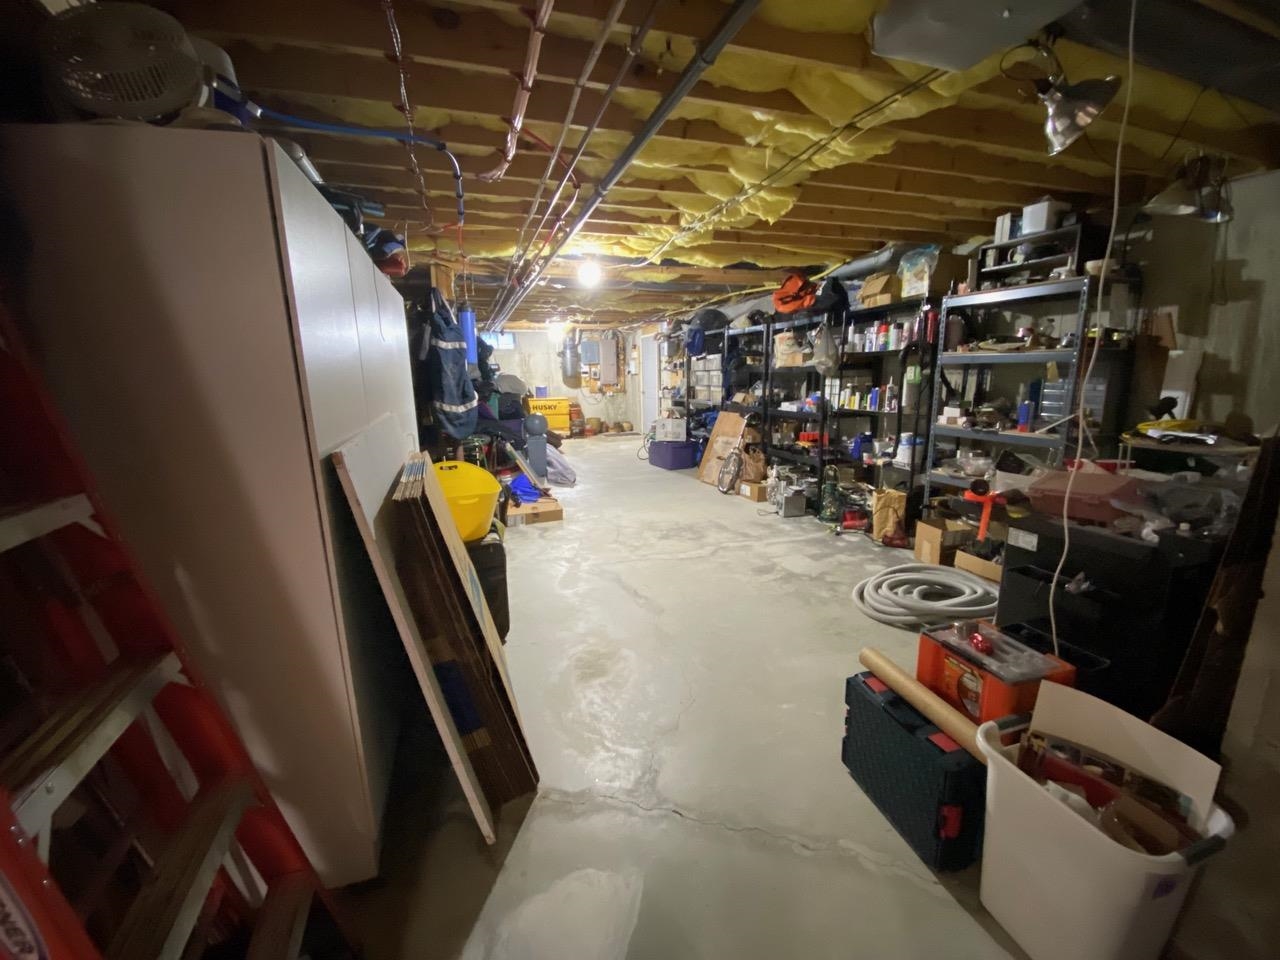 Large basement